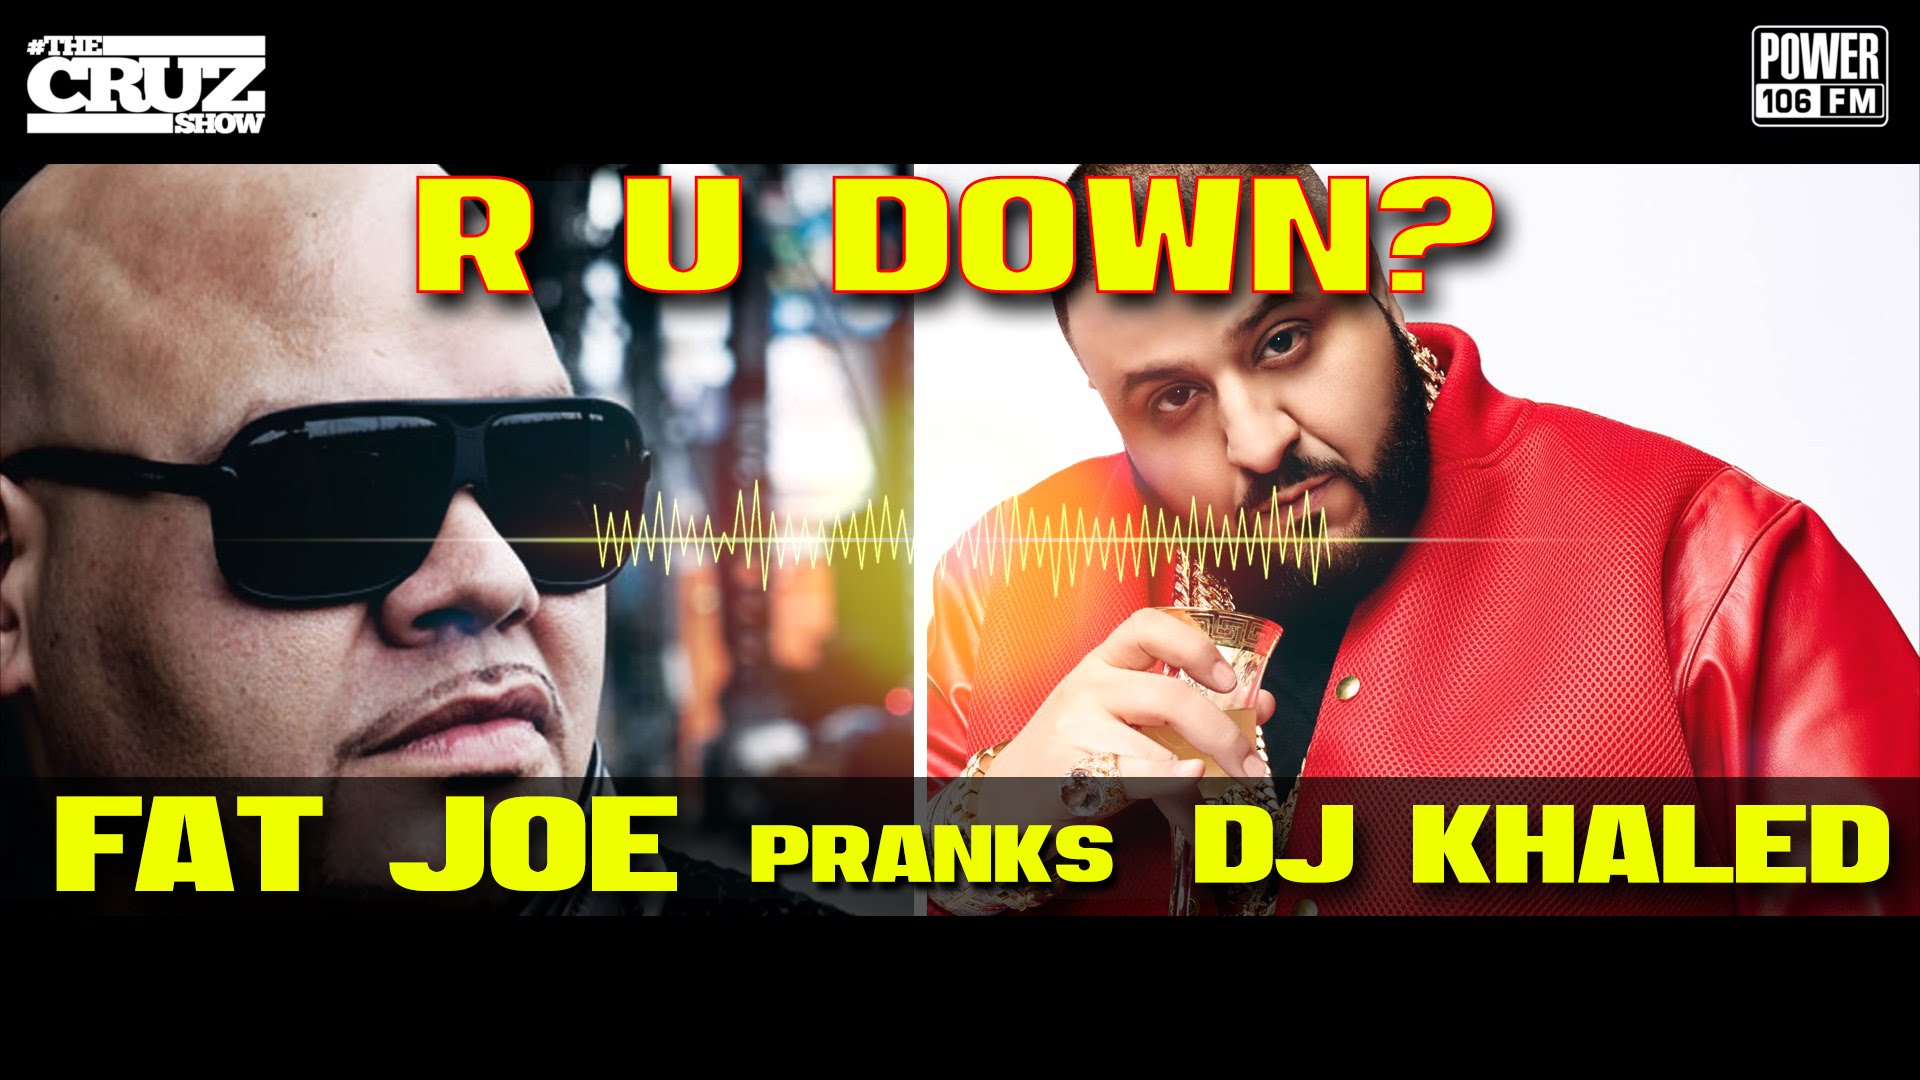 Fat Joe Pranks Dj Khaled On The Cruz Show (Video)